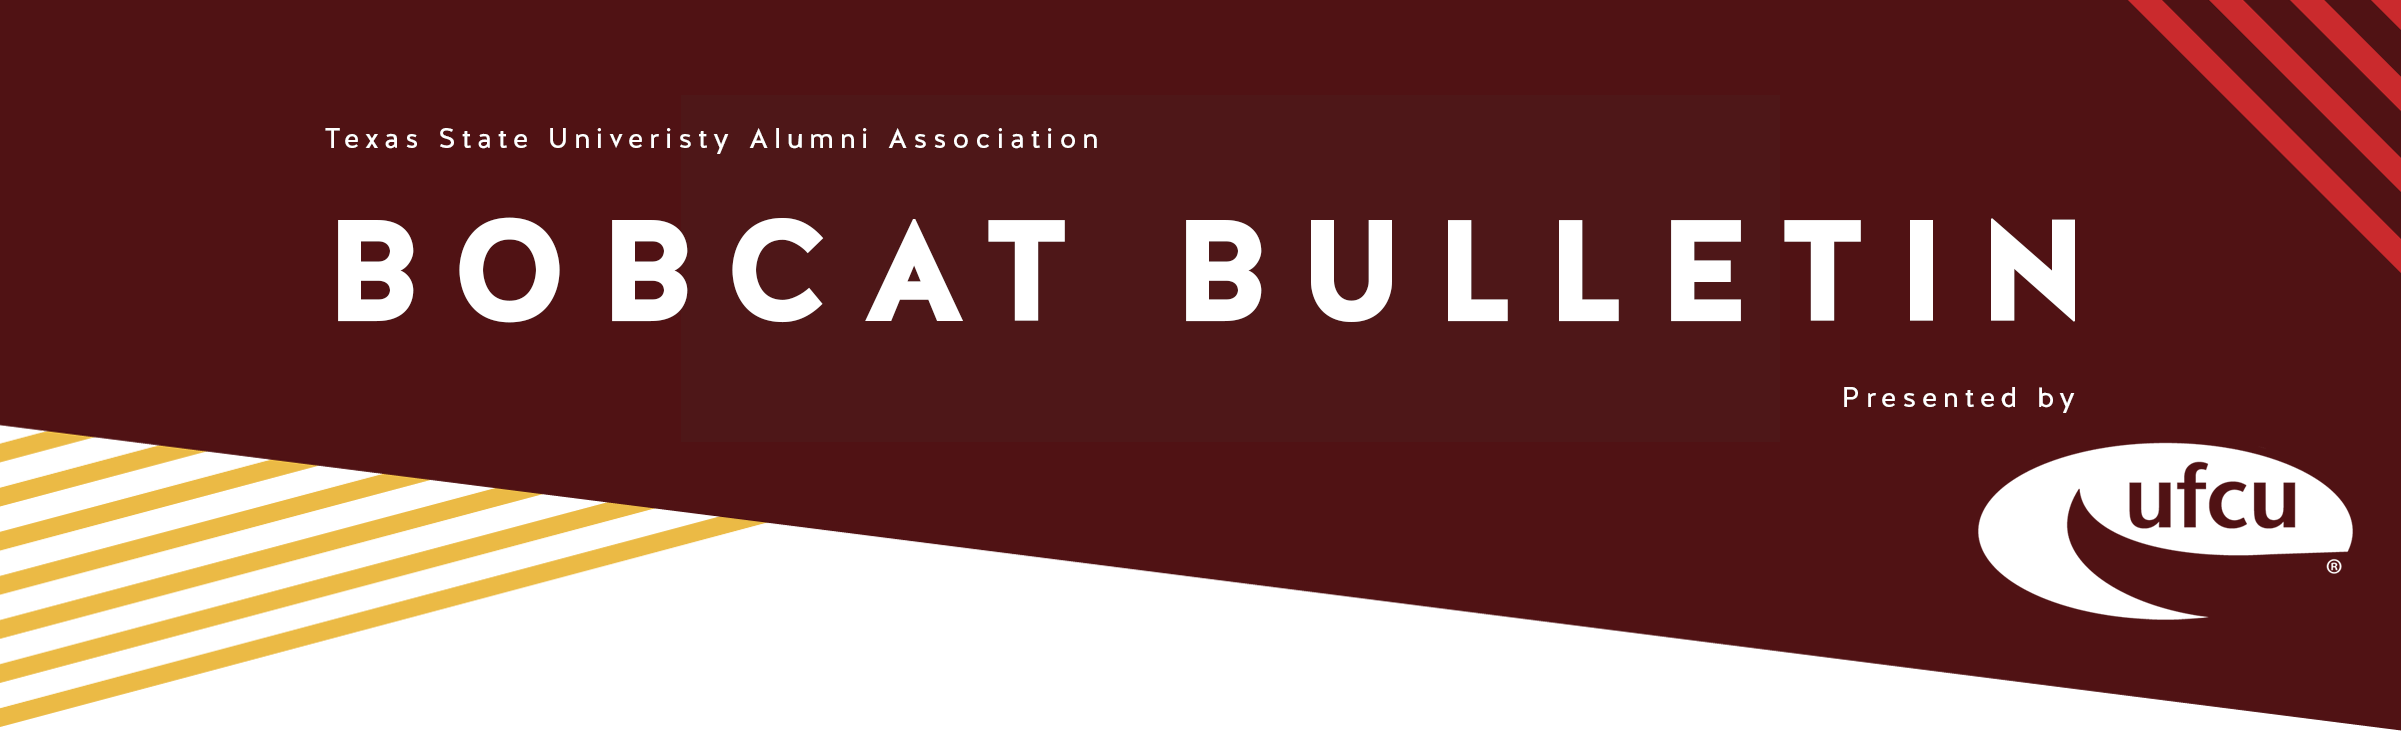 TXST Alumni Association Bobcat Bulletin Presented by UFCU